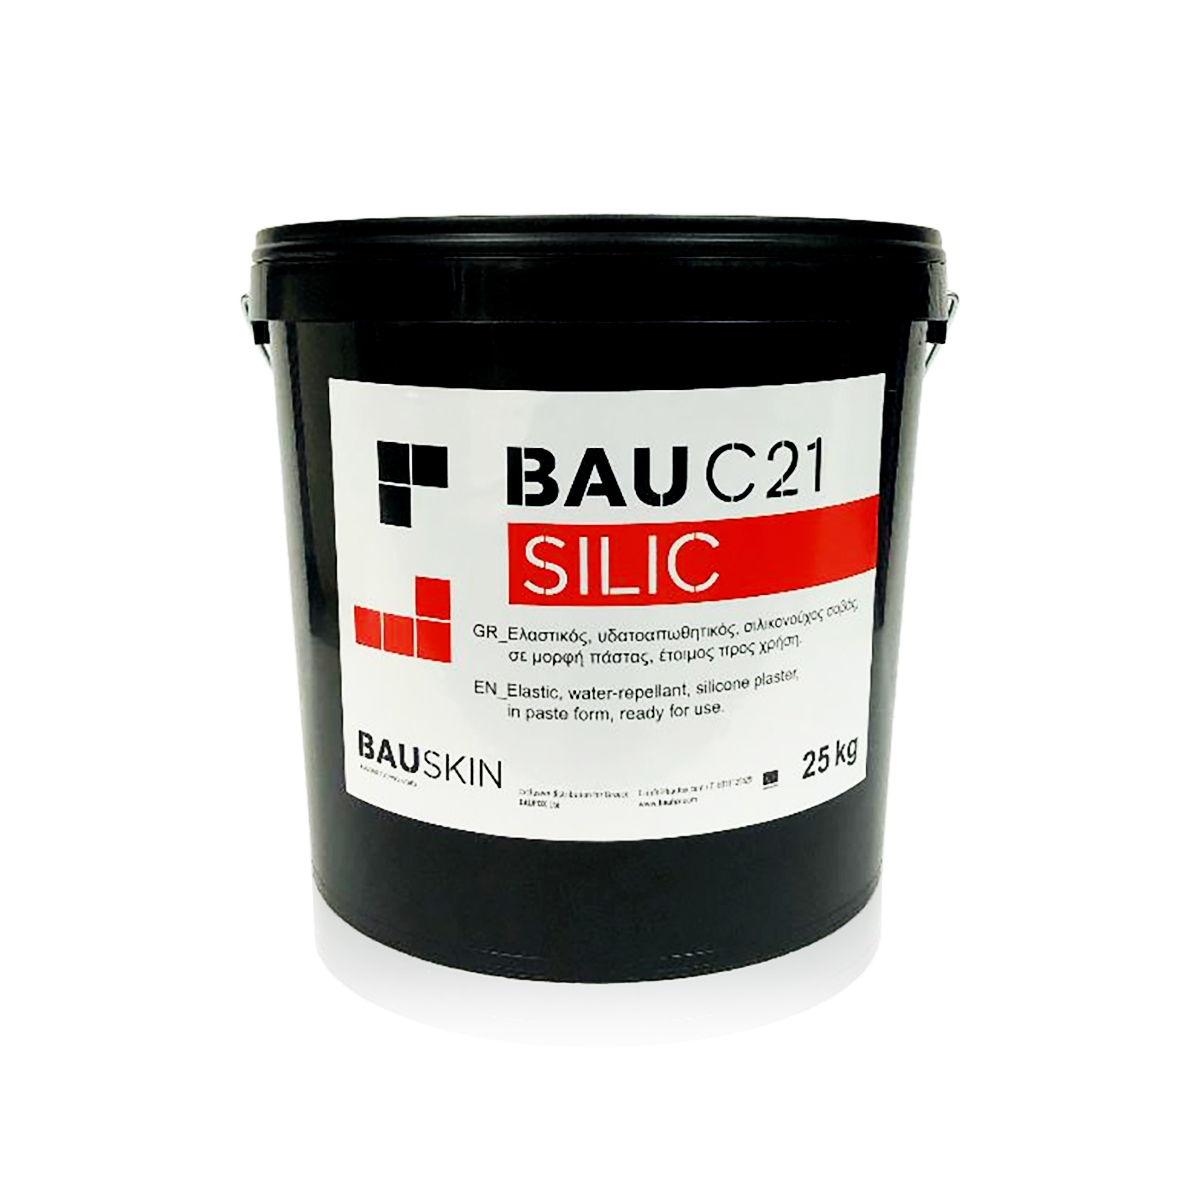 BAU C21 SILIC, σοβάς σε πάστα, 1,0mm F, έγχρωμος 25kg/δοχείο